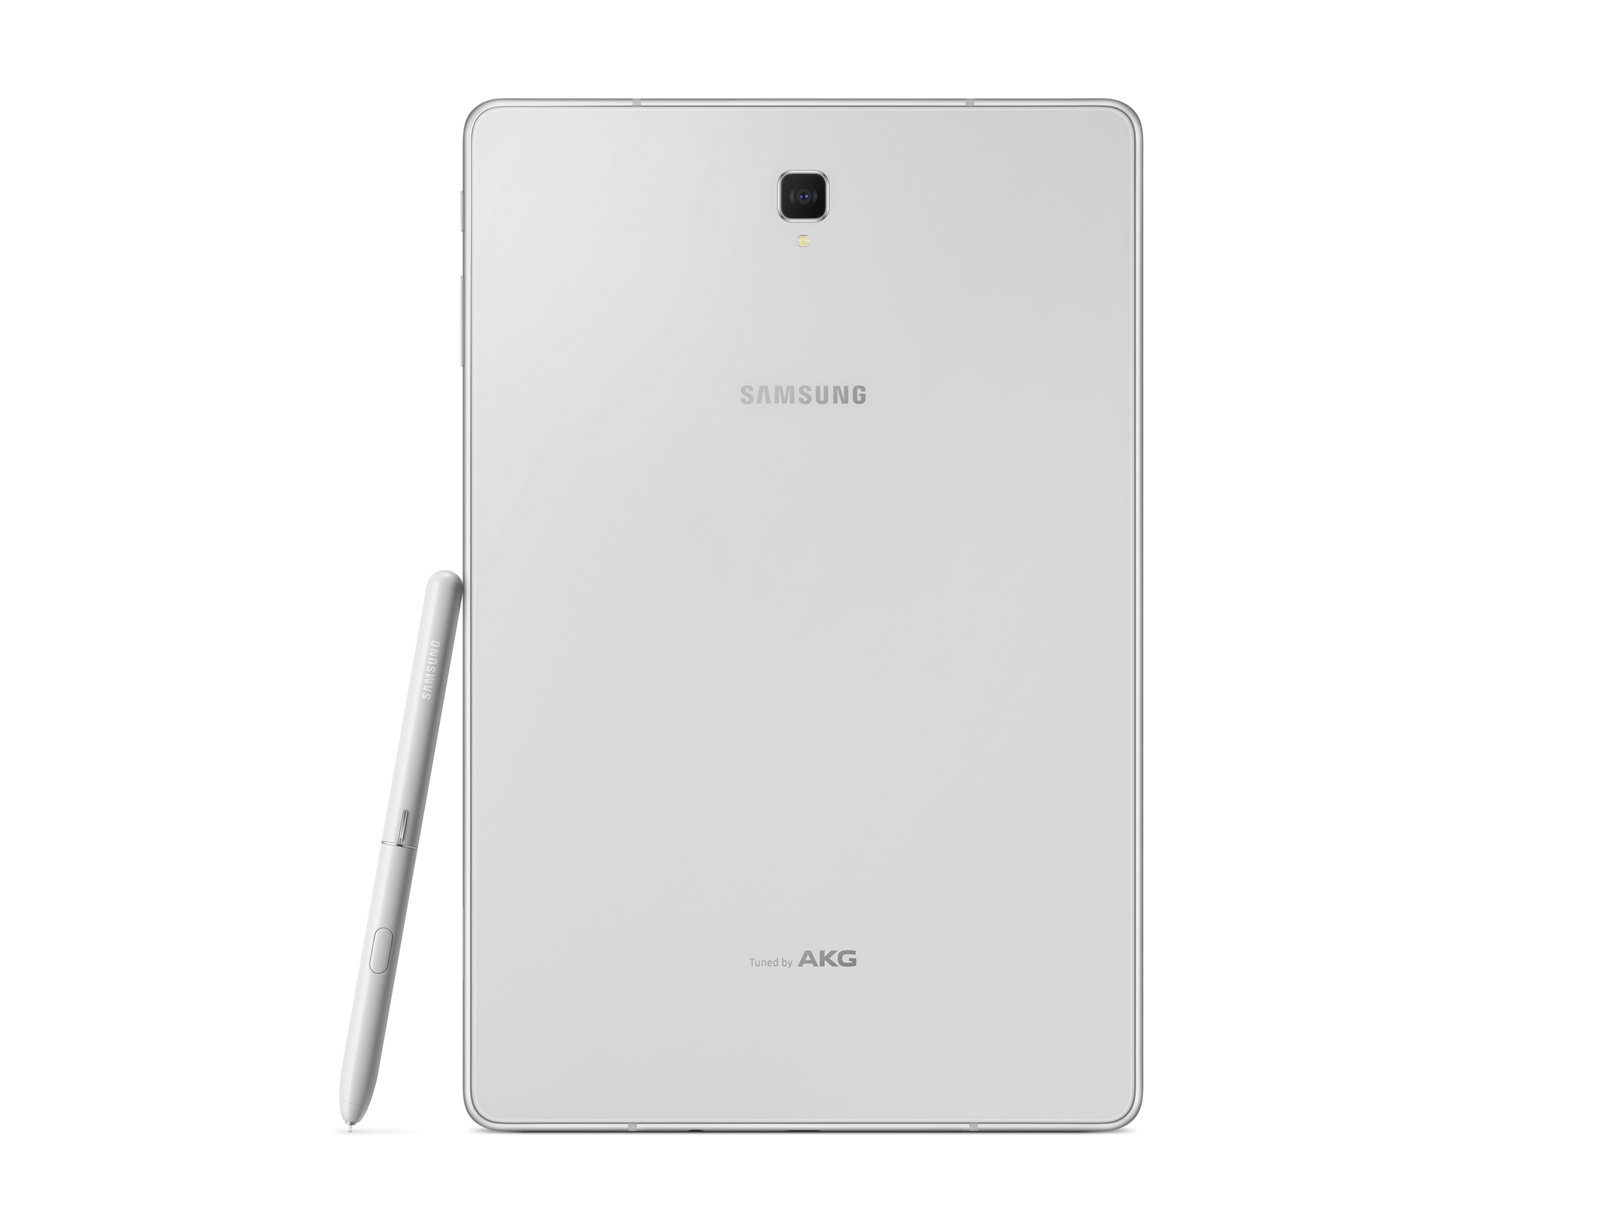 Samsung Galaxy Tab S4 Lte 64gb